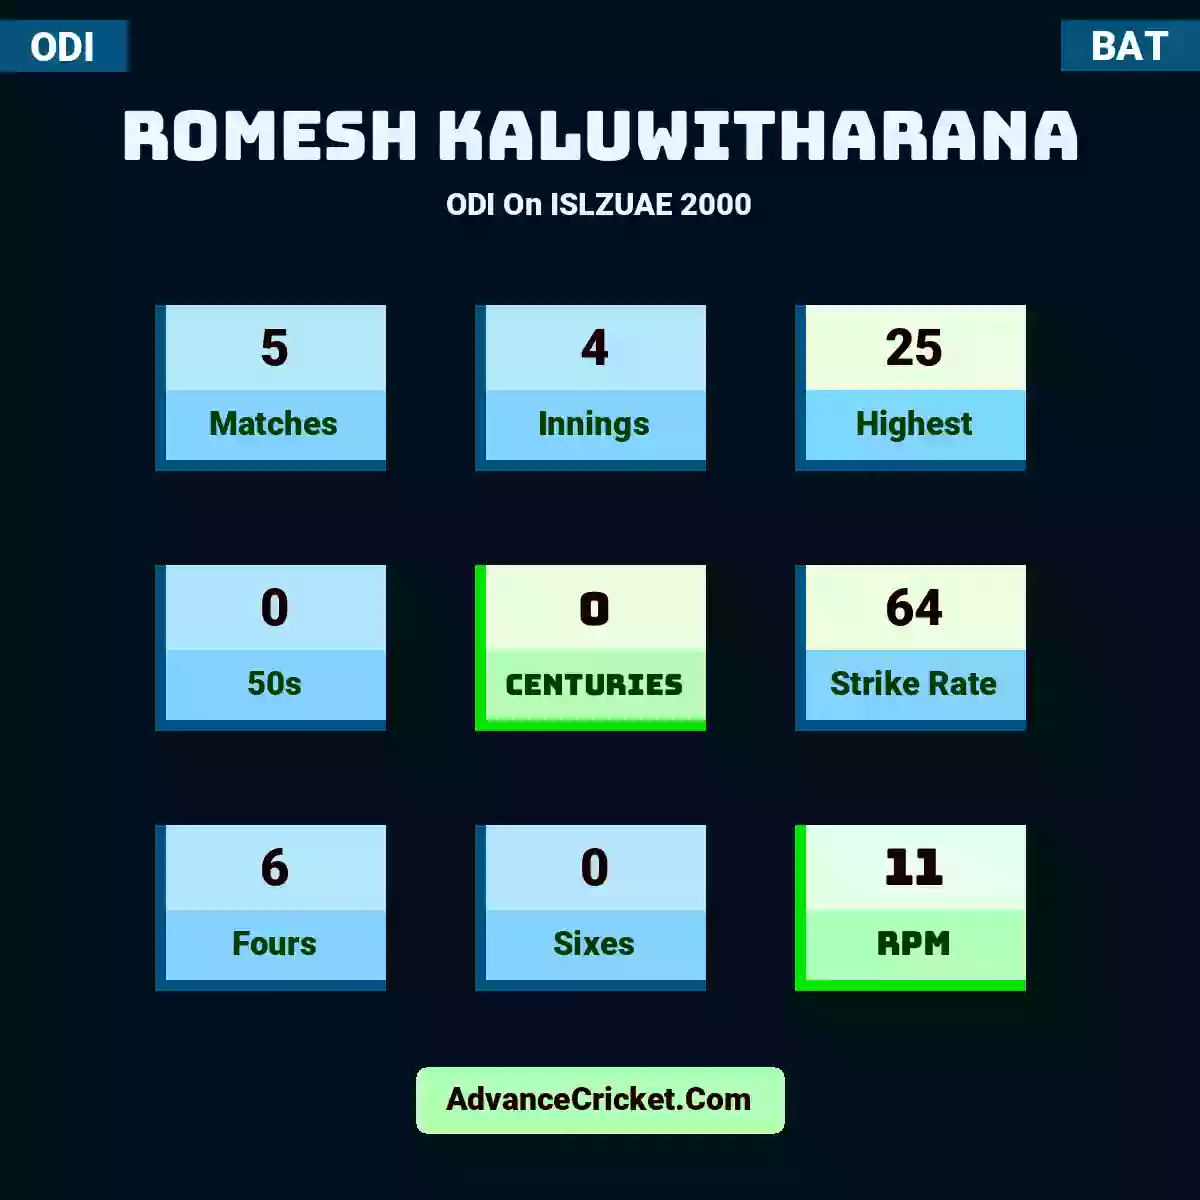 Romesh Kaluwitharana ODI  On ISLZUAE 2000, Romesh Kaluwitharana played 5 matches, scored 25 runs as highest, 0 half-centuries, and 0 centuries, with a strike rate of 64. R.Kaluwitharana hit 6 fours and 0 sixes, with an RPM of 11.